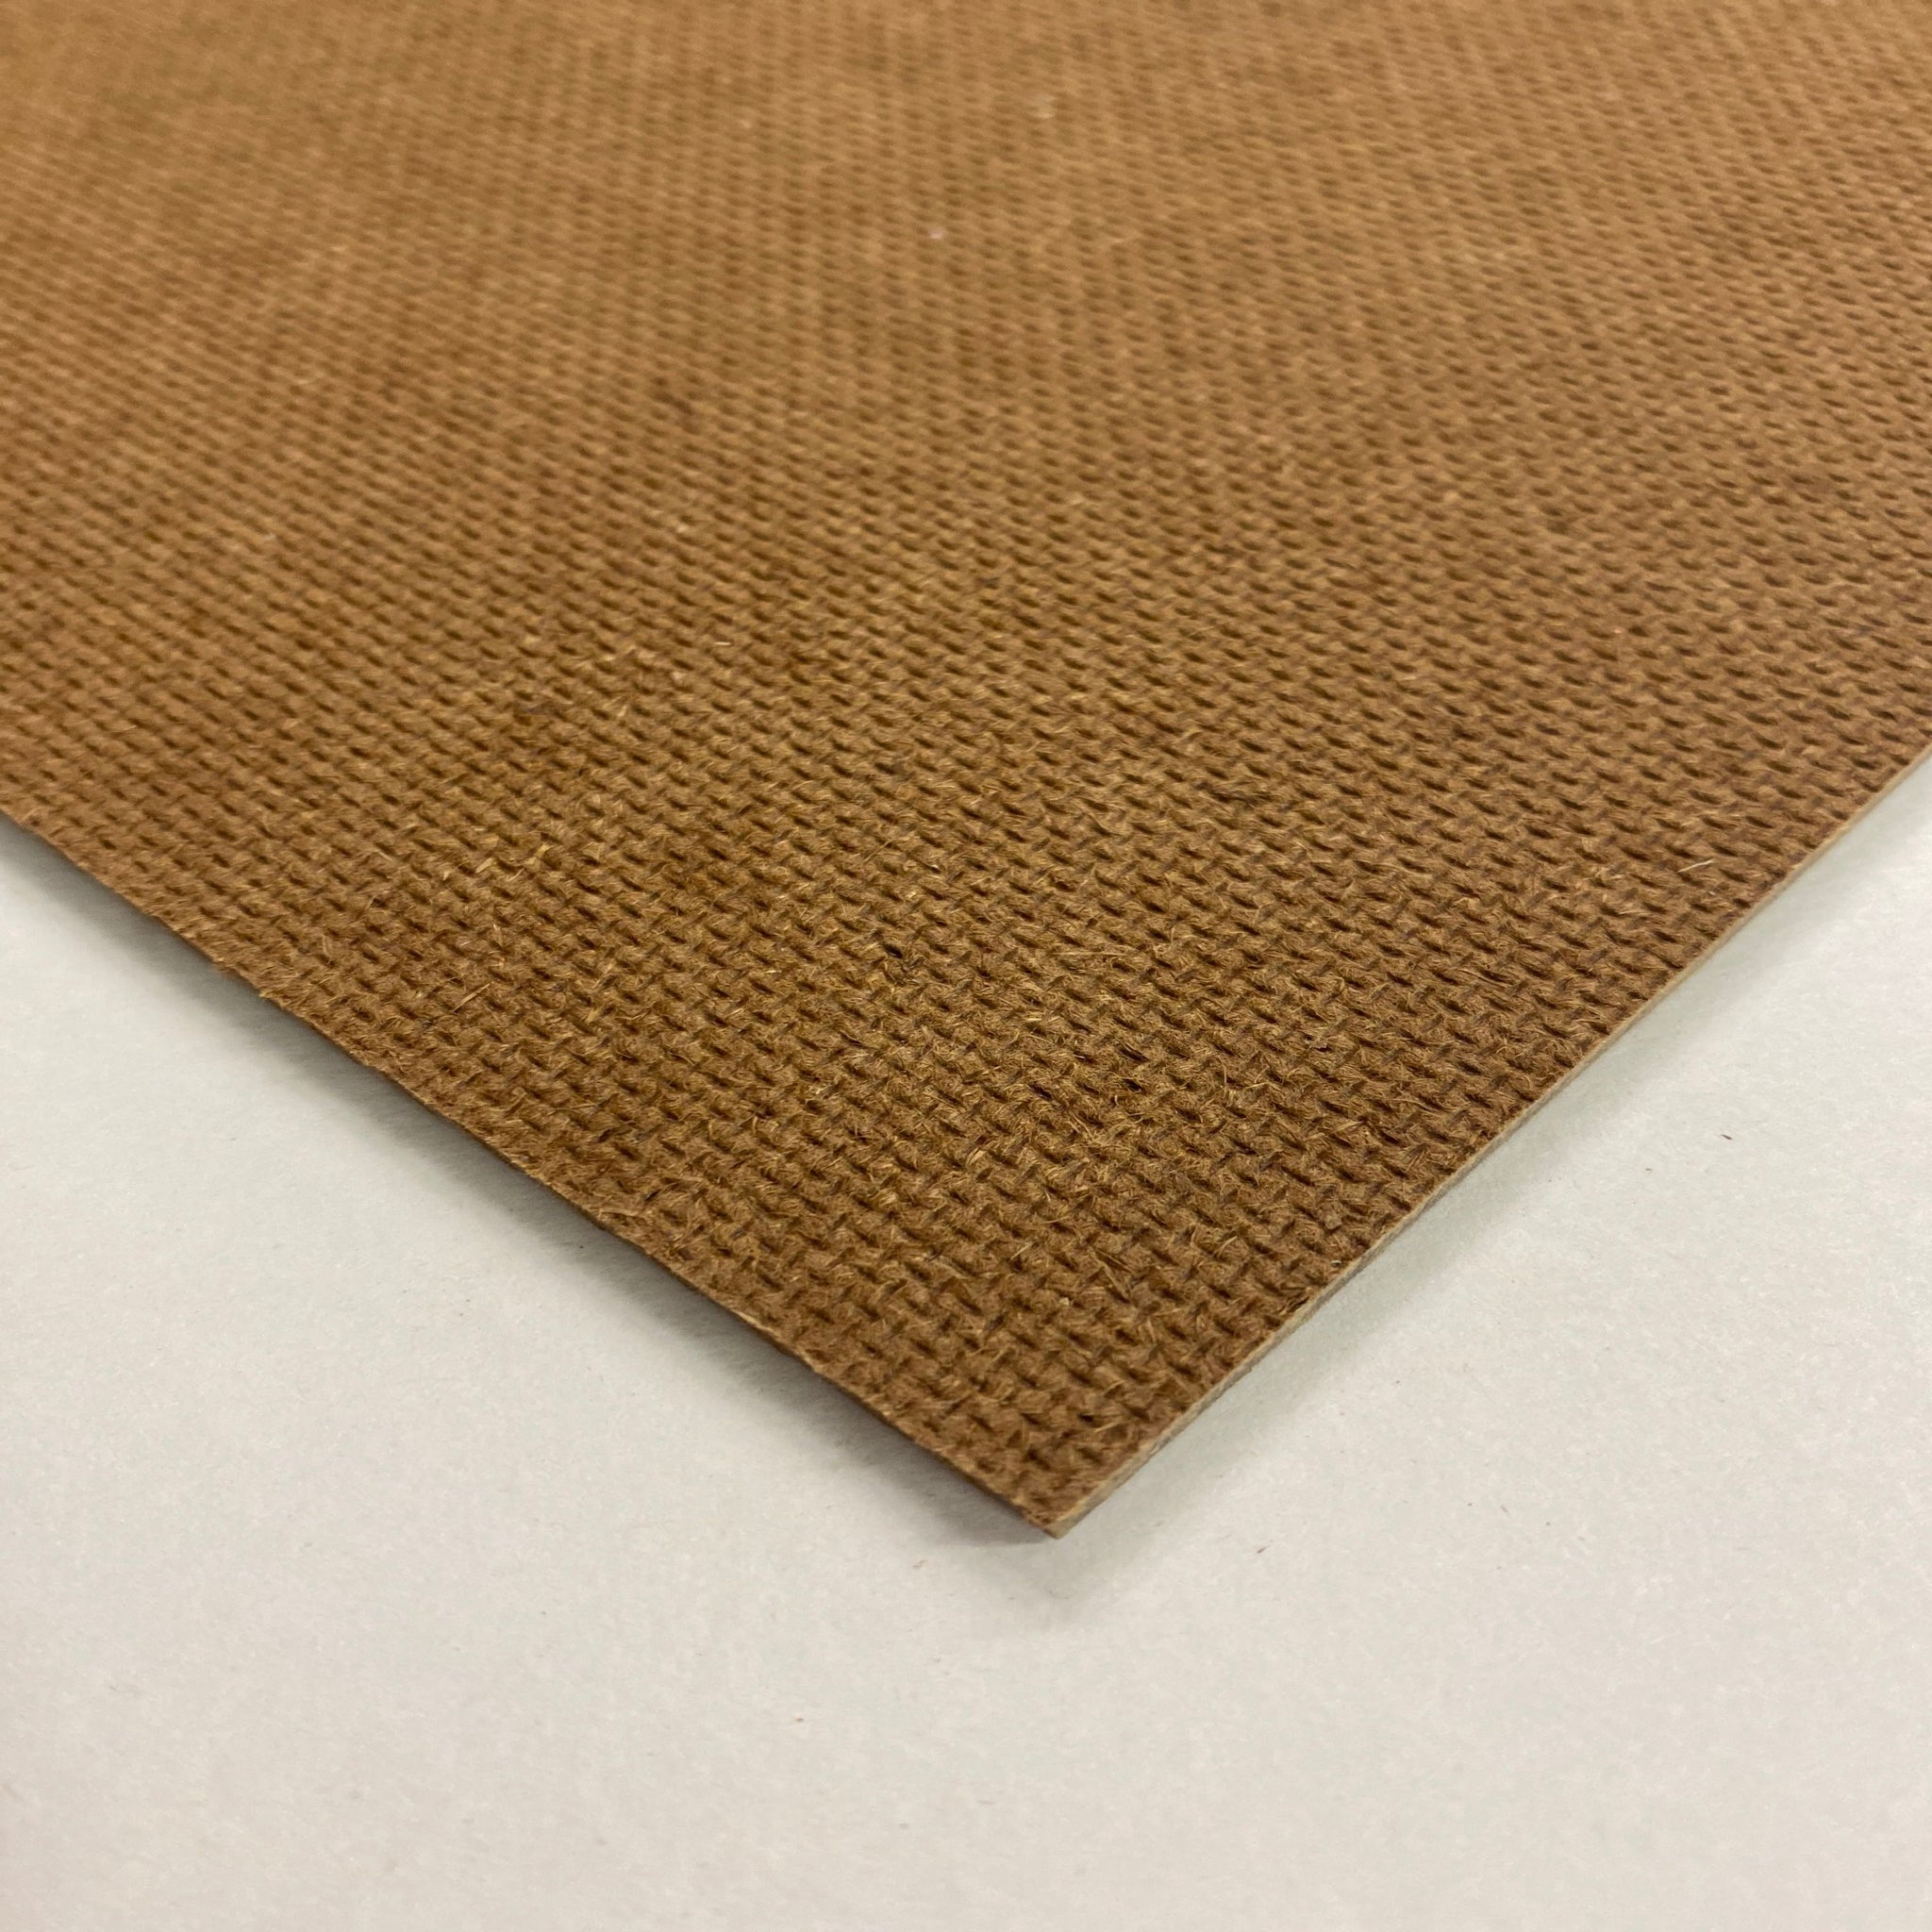 Eucalyptus Hardboard Panel - 1/8 / 3 mm Laser Cutting and Engraving –  MakerStock